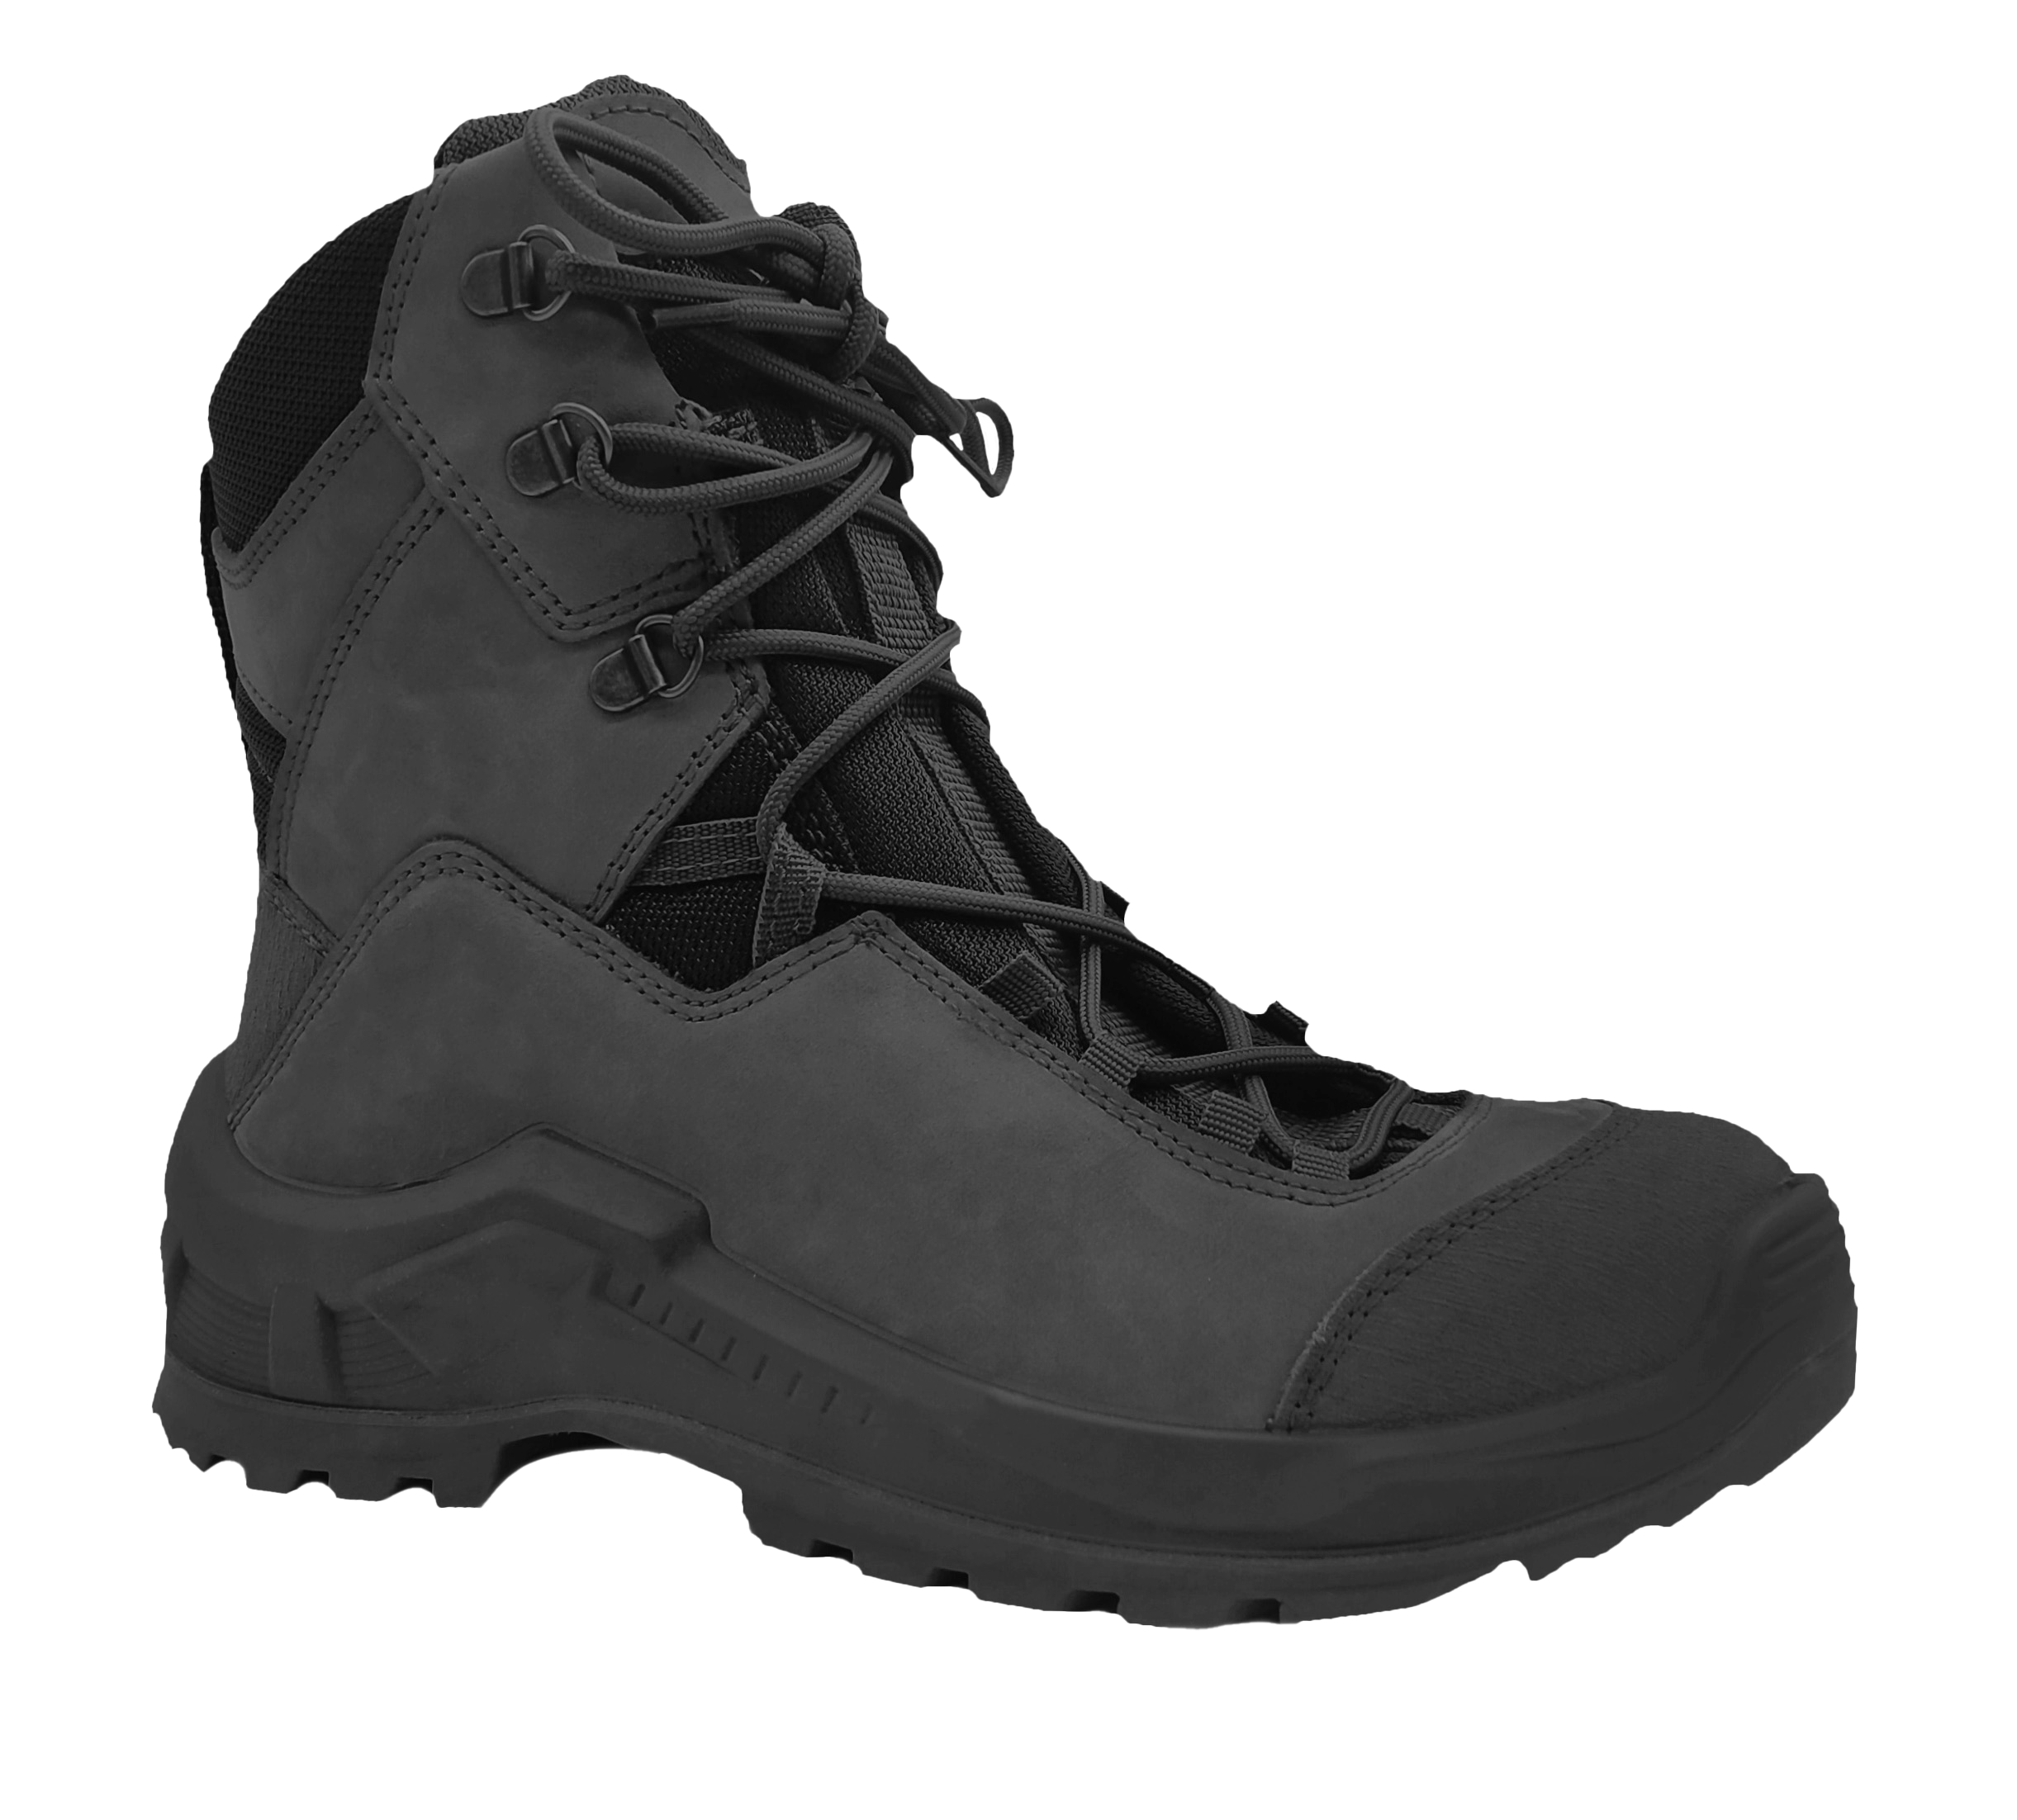 Triton hight boot (black)